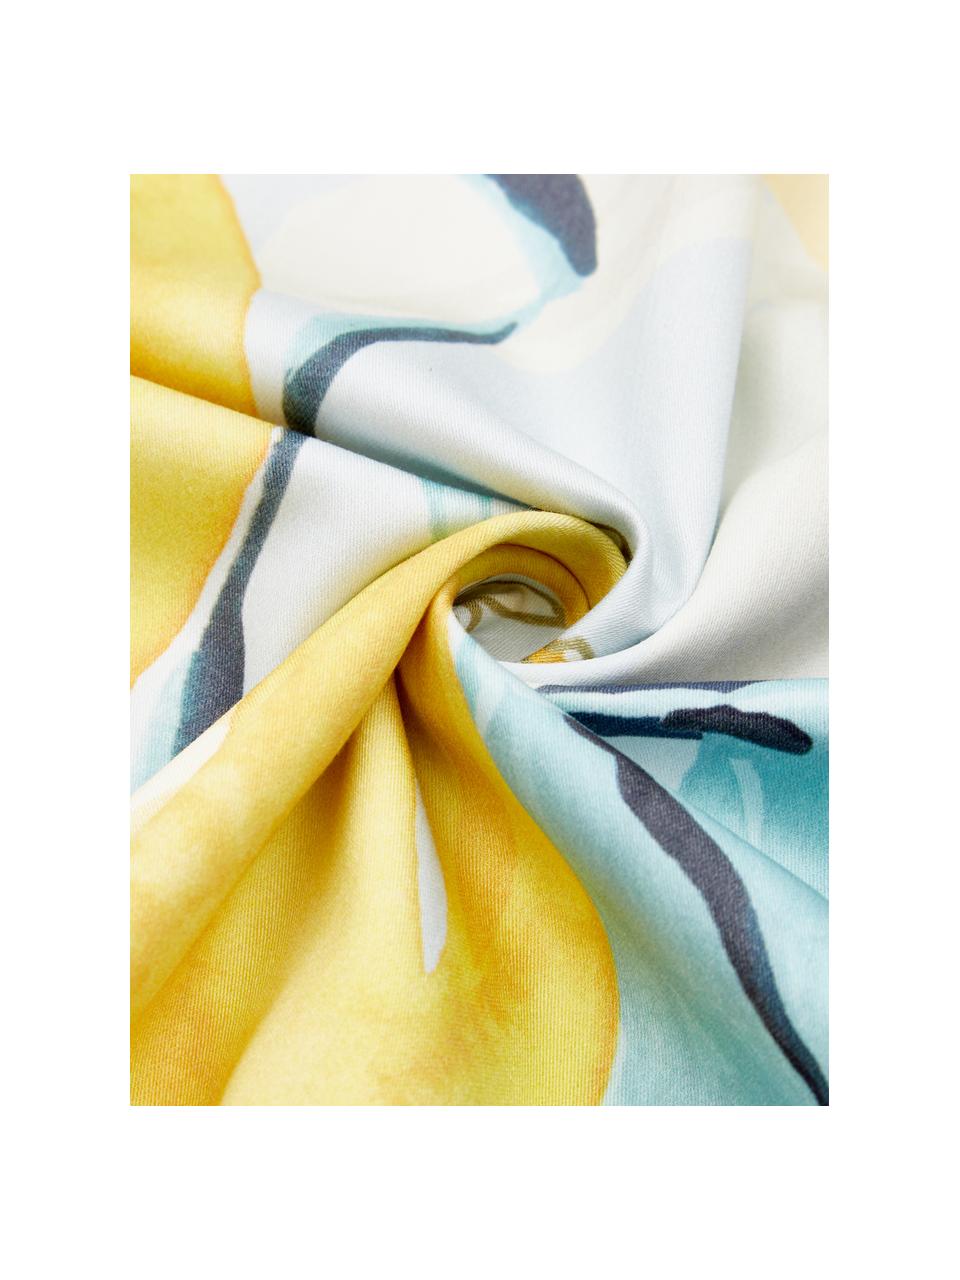 Parure de lit satin de coton réversible Garda, Bleu,jaune,blanc, larg. 135 x long. 200 cm + 1 taie d'oreiller 80 x 80 cm